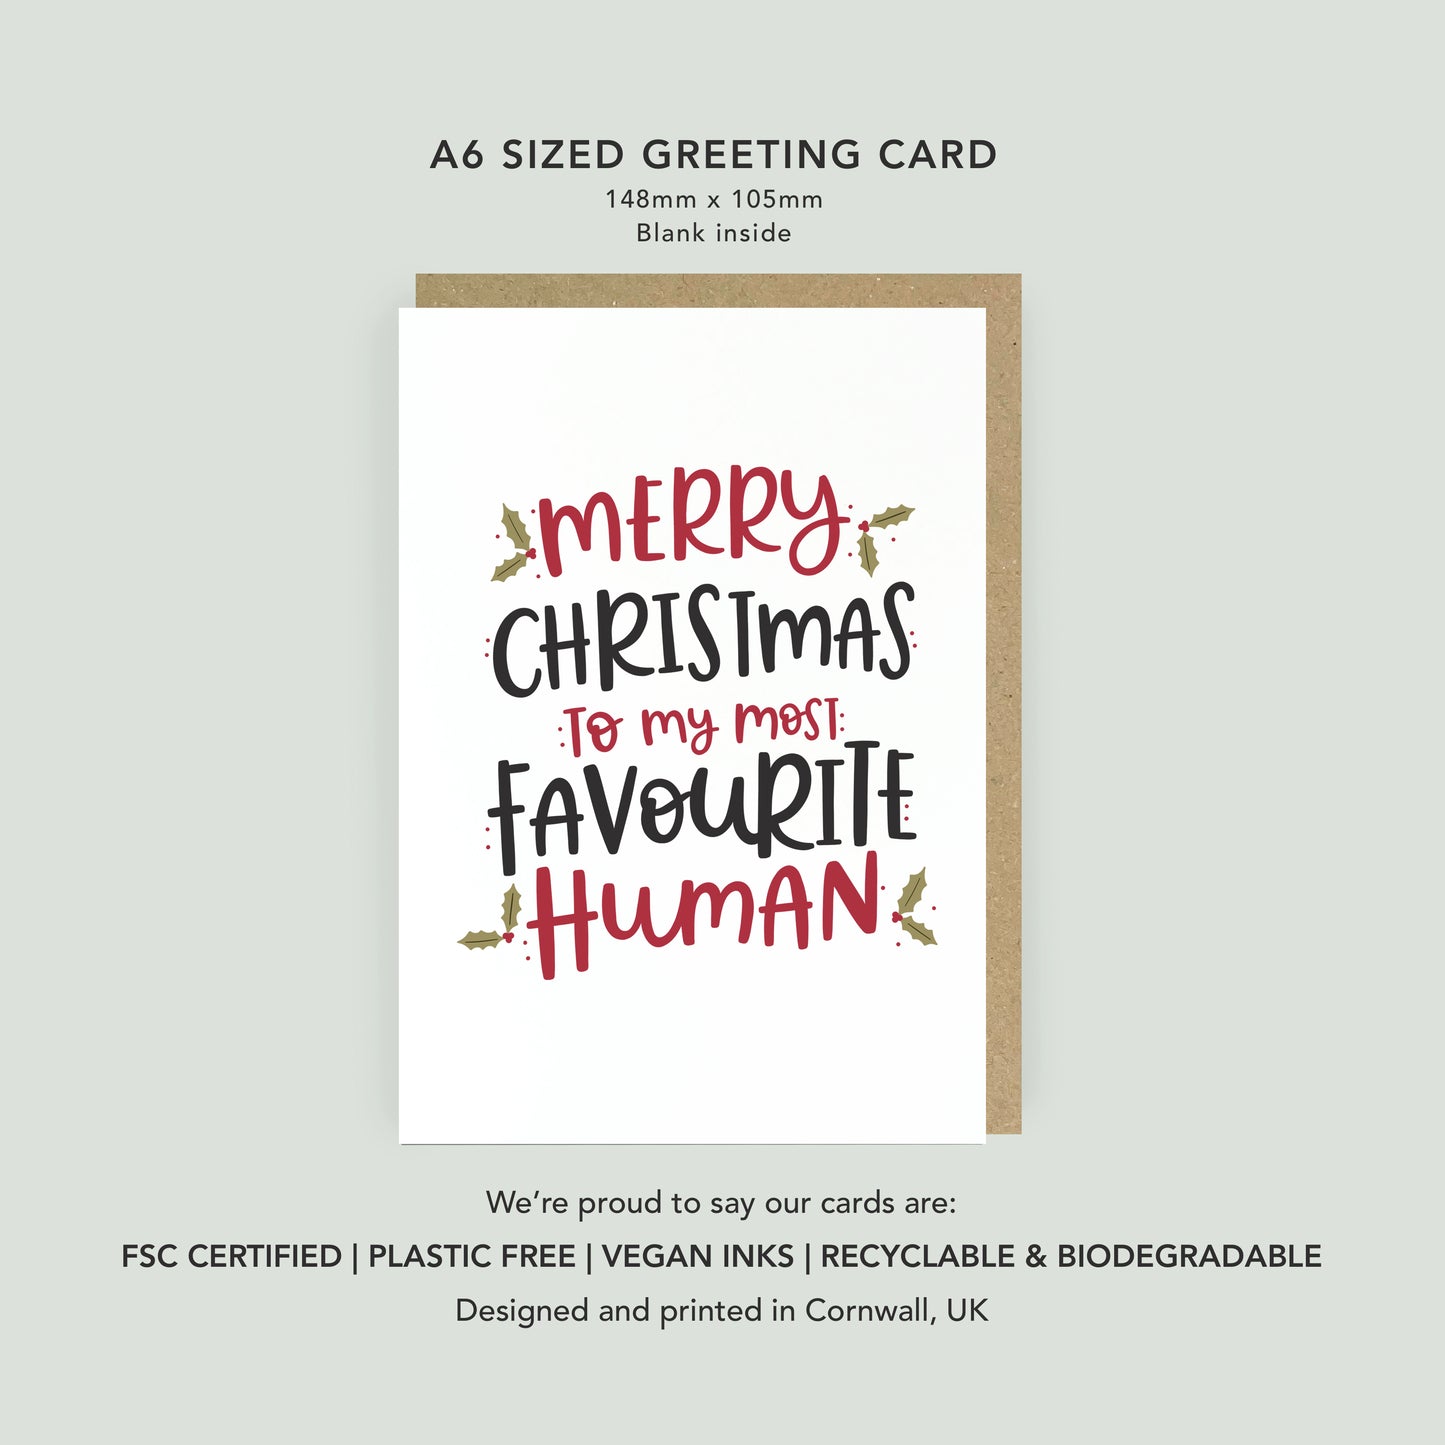 Favourite Human Christmas Card